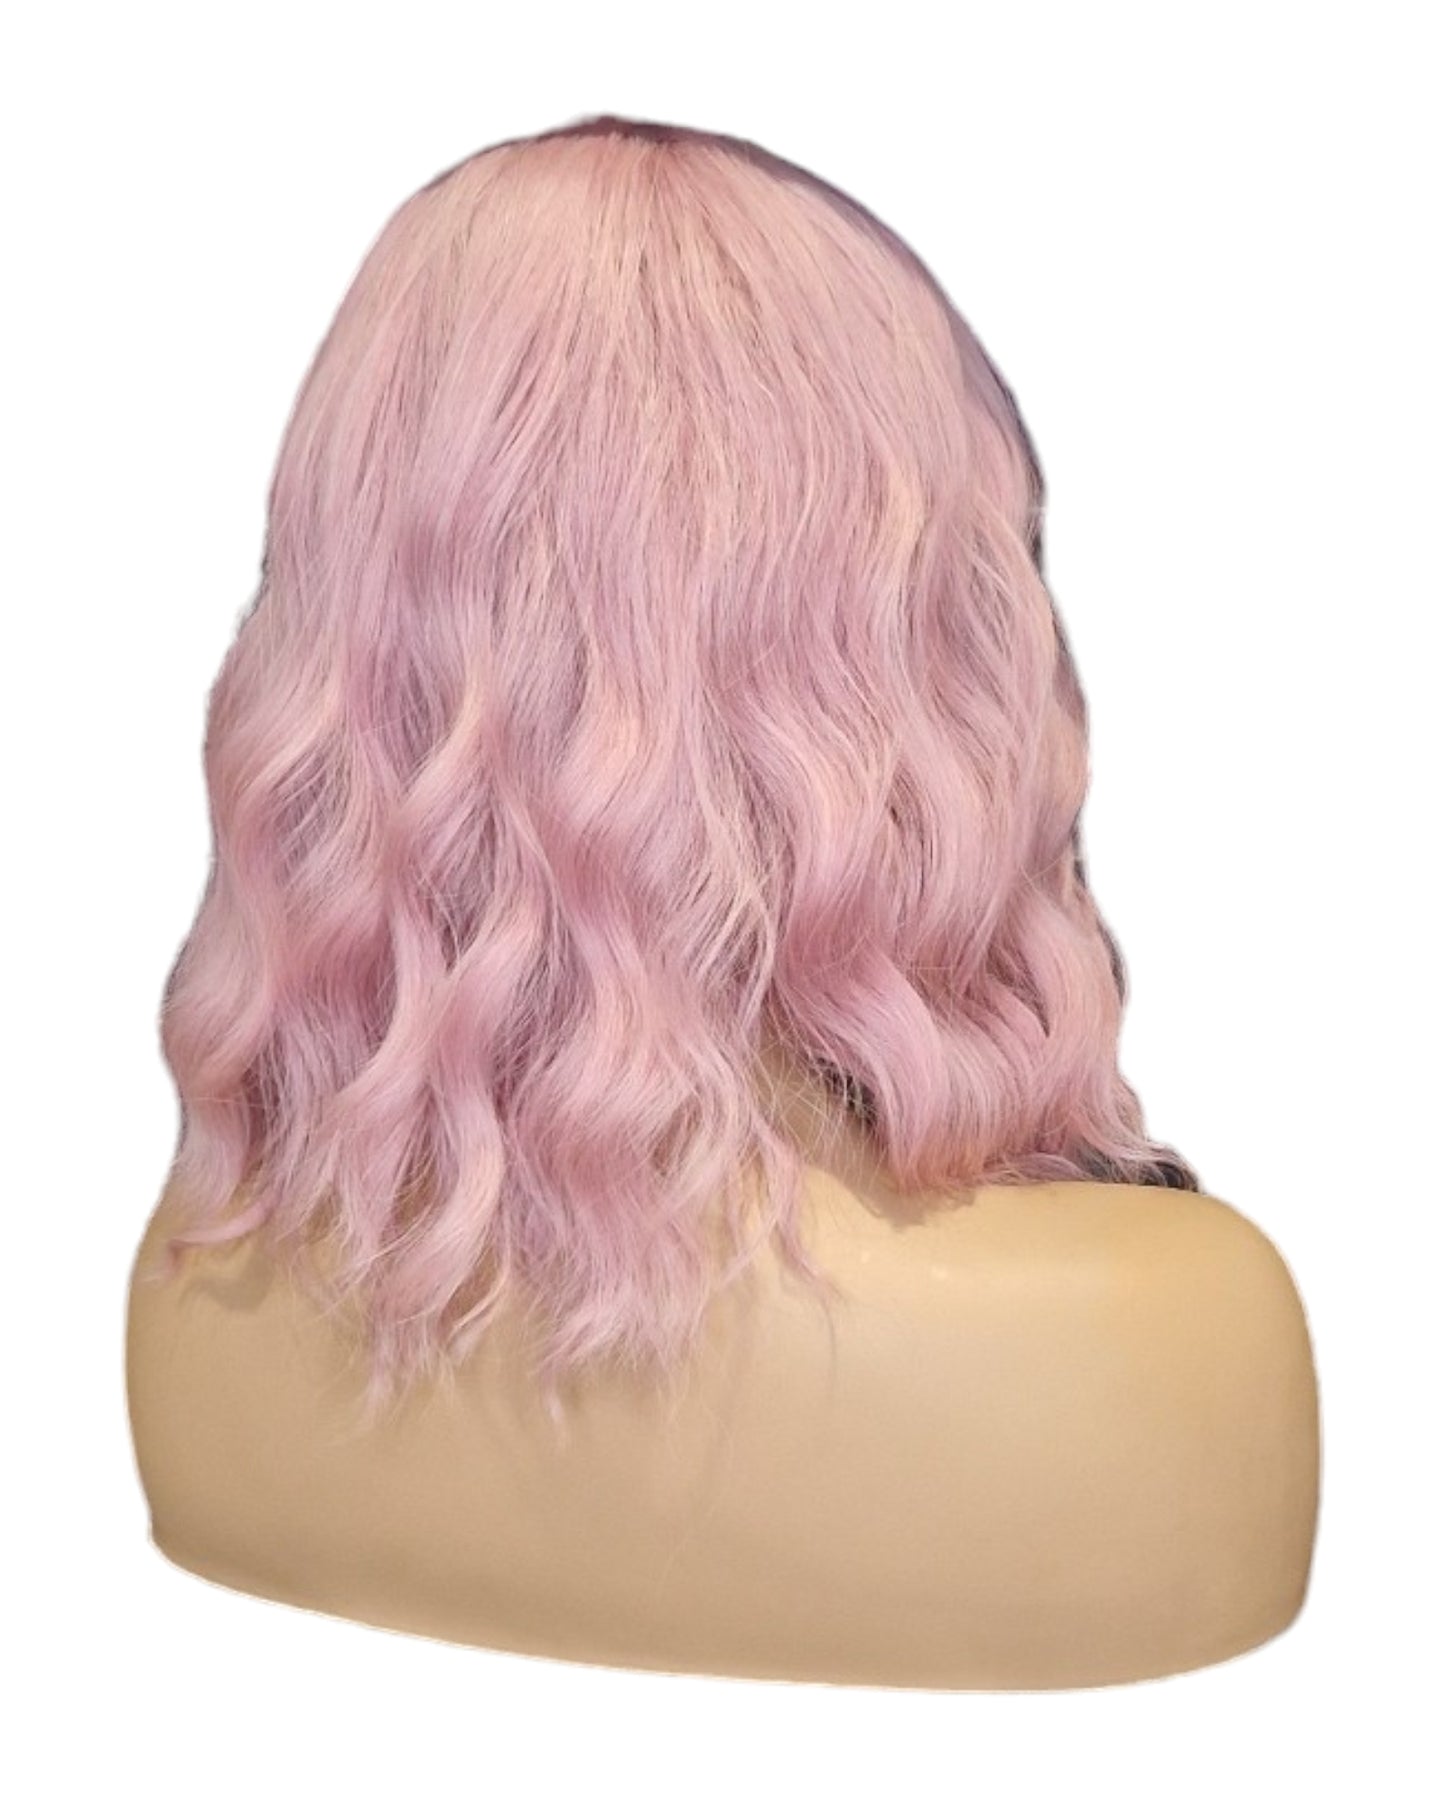 Wavy Pink Fashion Wig With Fringe Bangs. Sherry